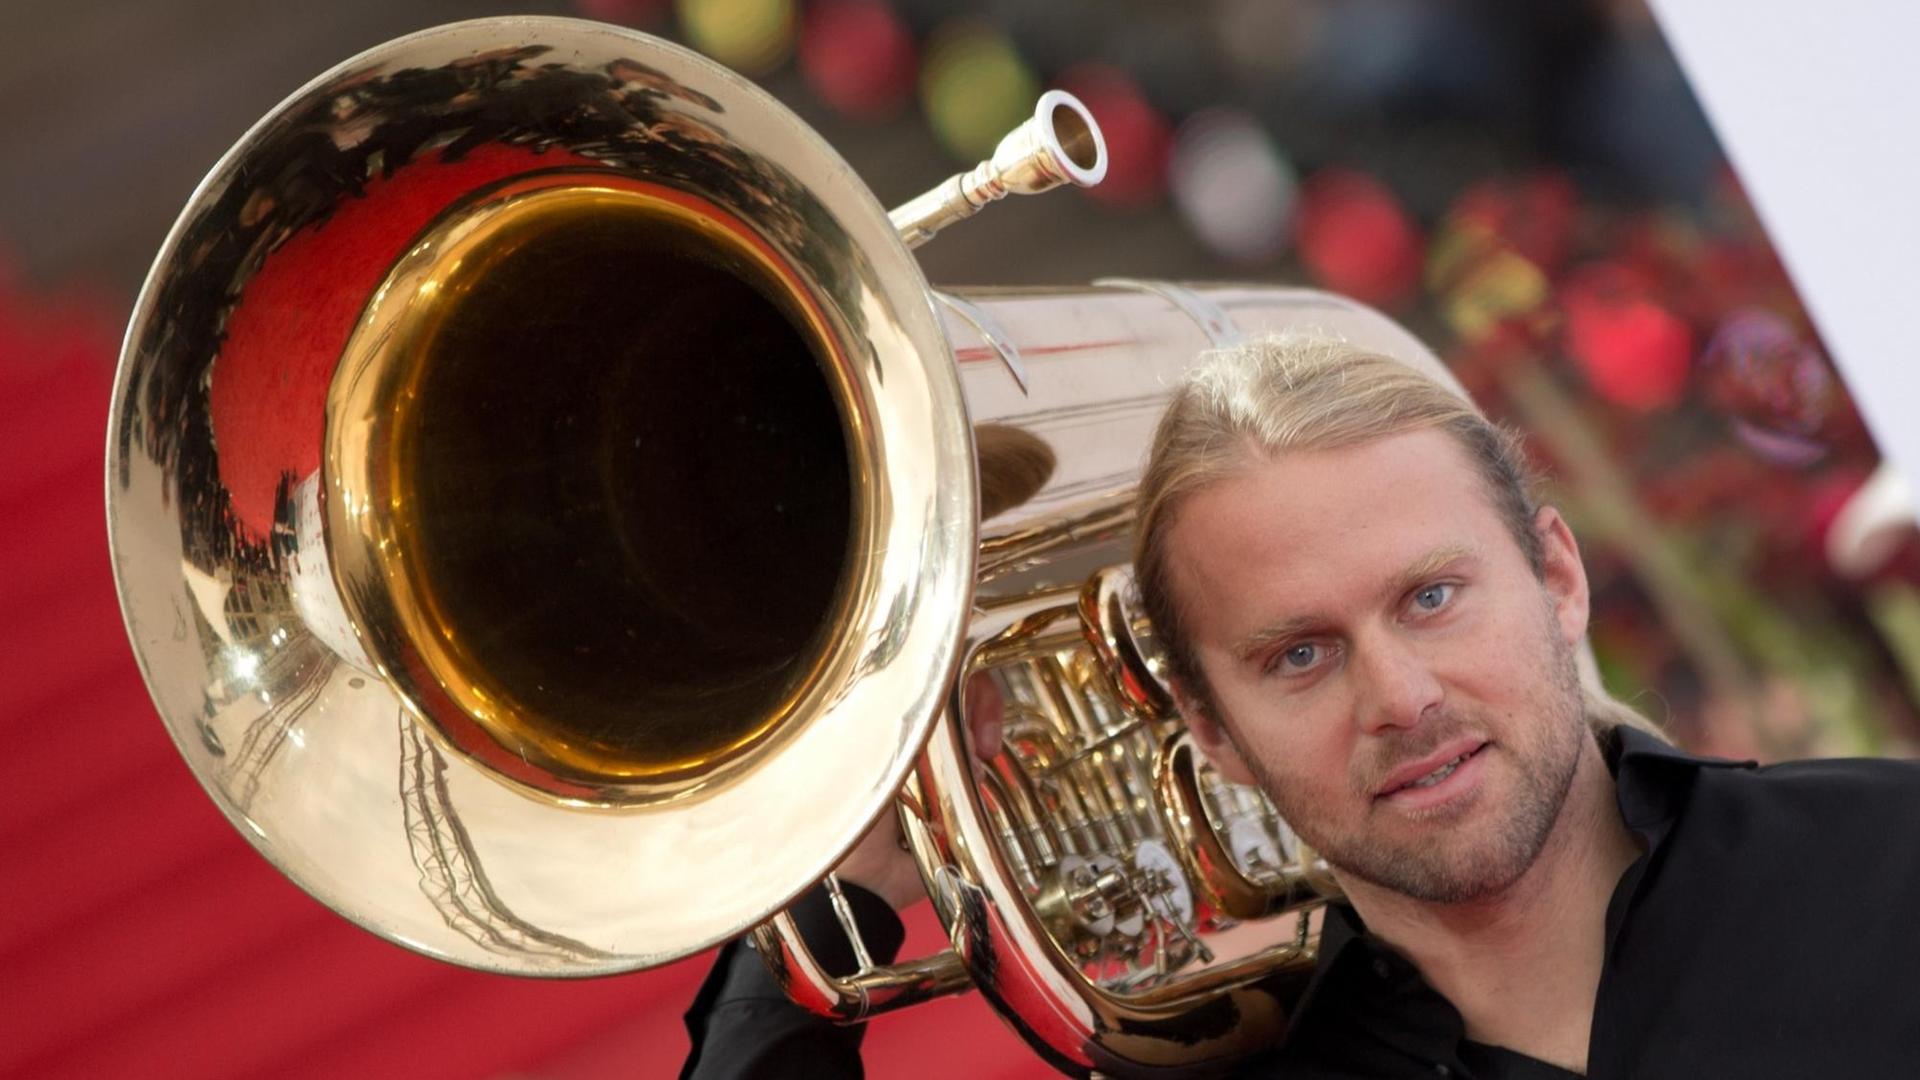 Andreas Martin Hofmeir bei der Verleihung des Musikpreises "Echo Klassik" am 06.10.2013.